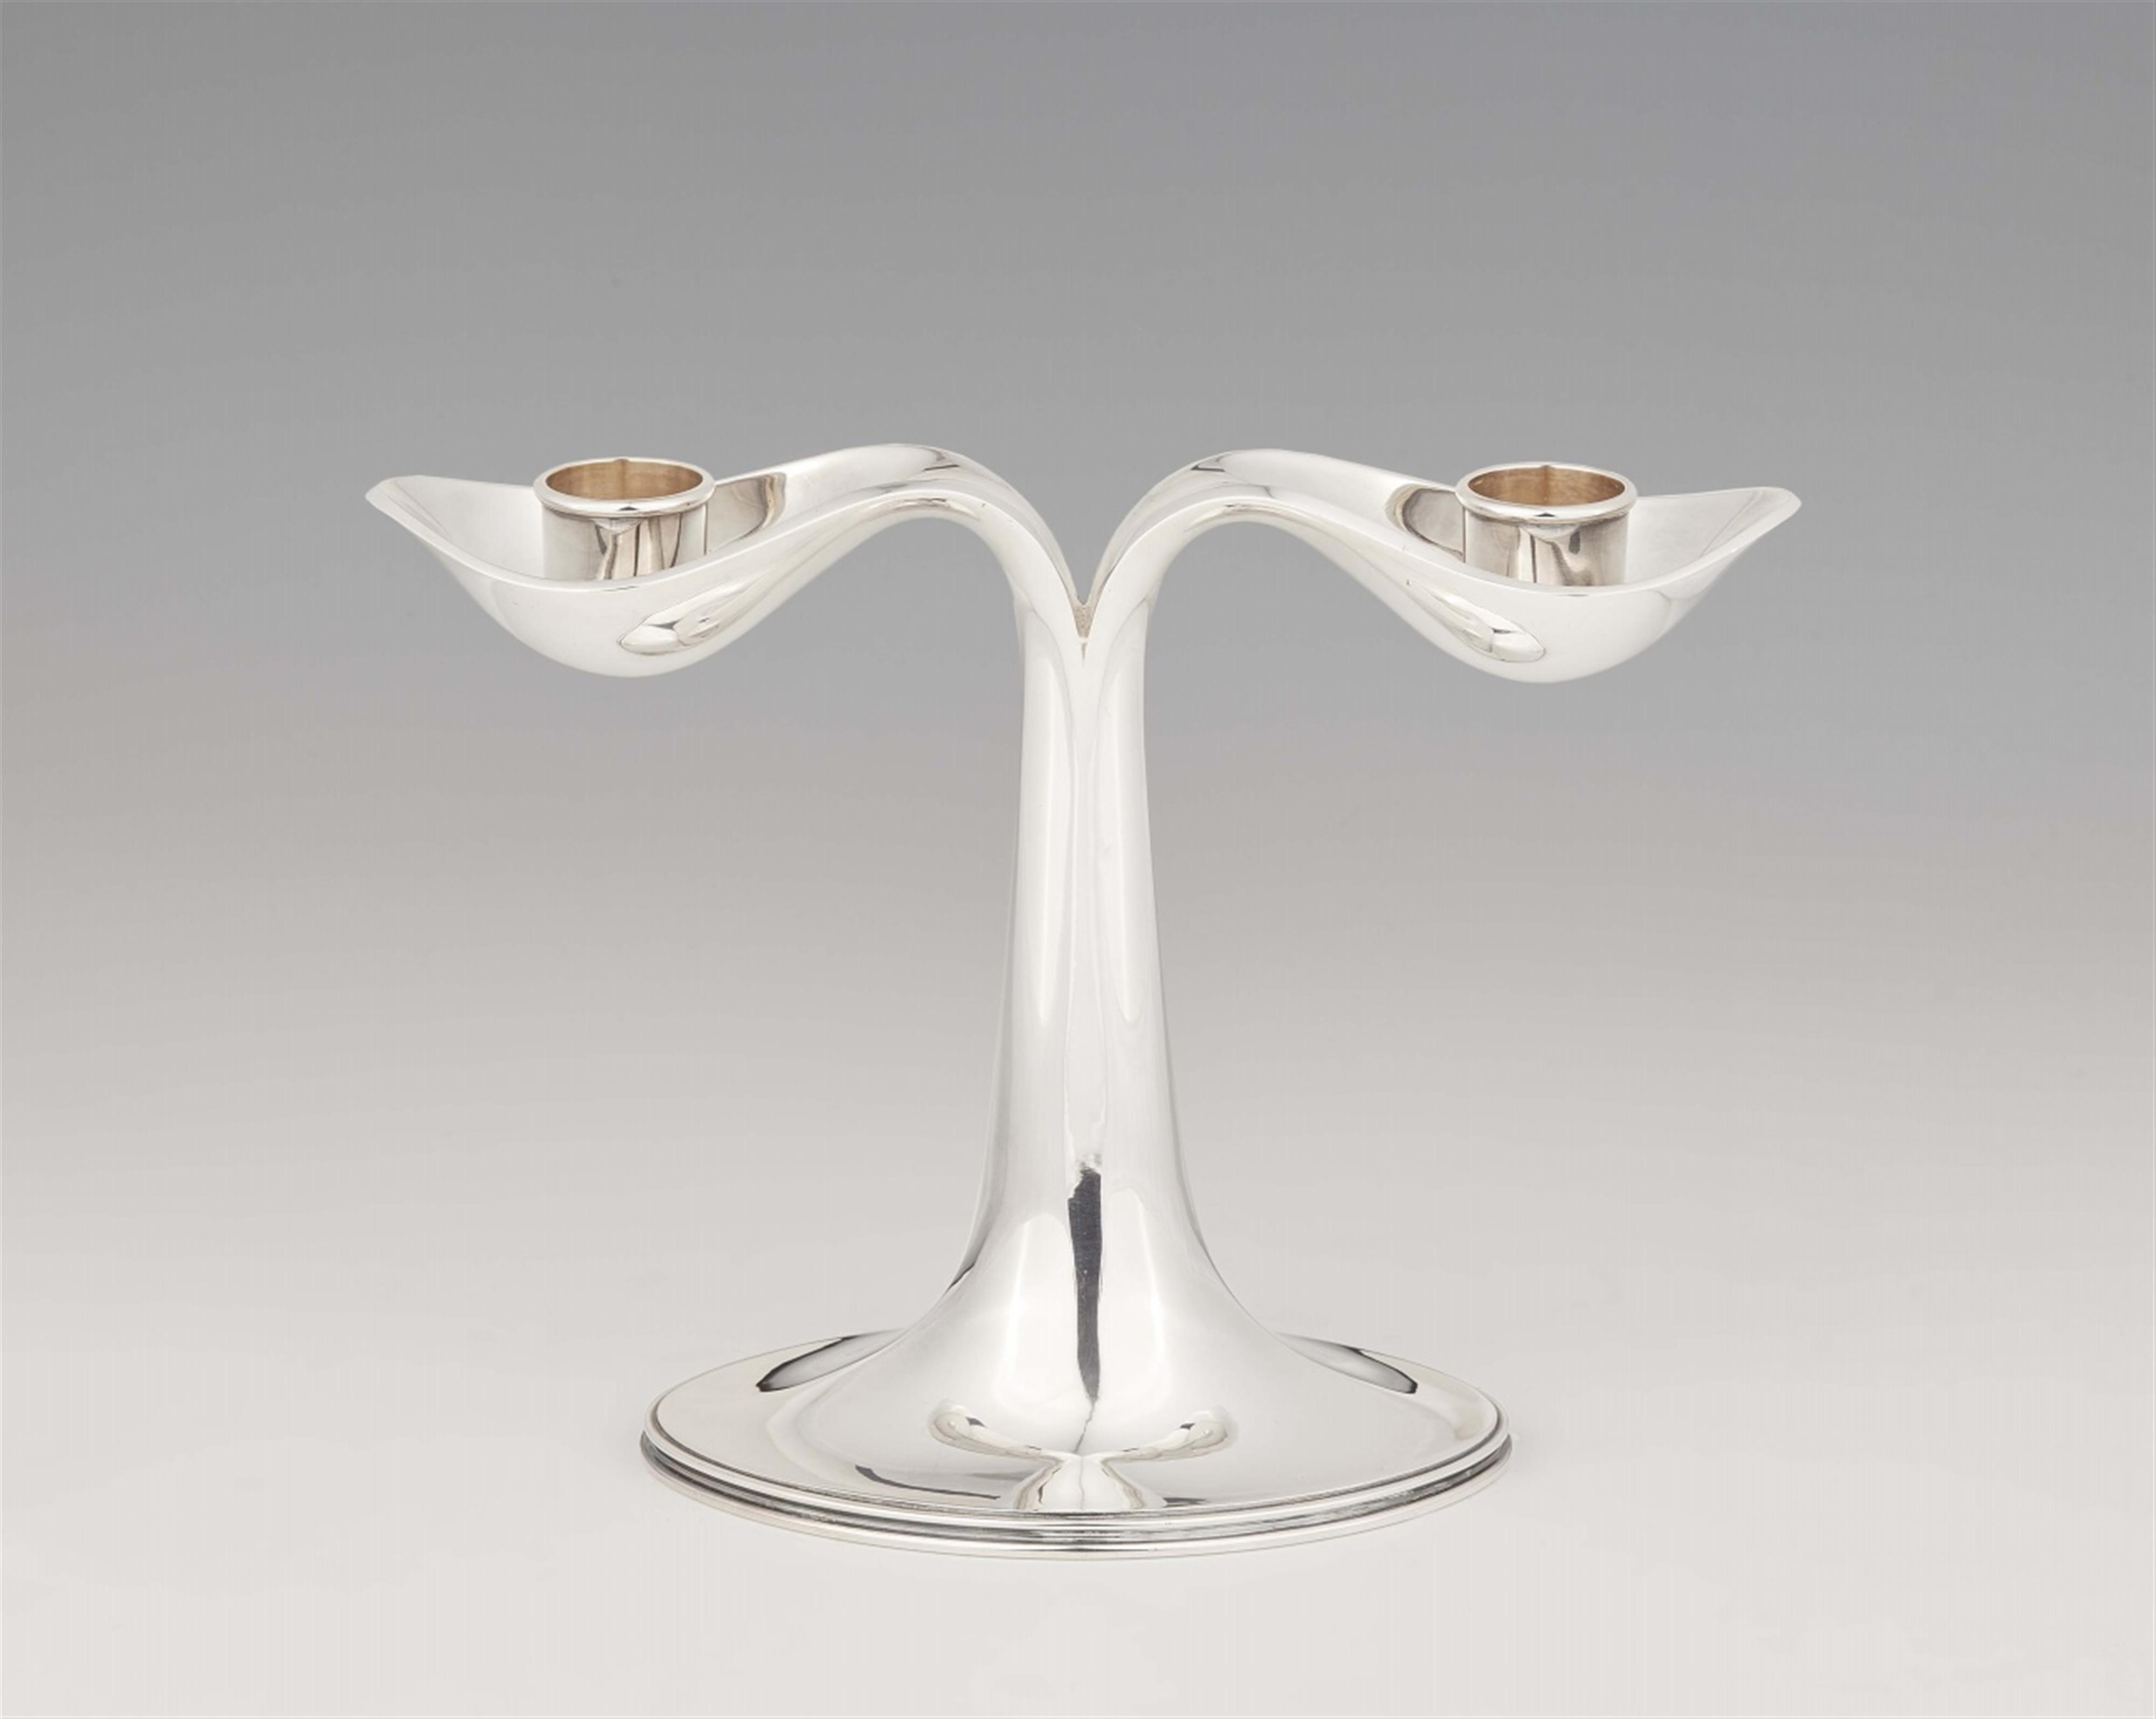 A Kolding silver candlestick by Hans Hansen, model no. HH 485 - image-1